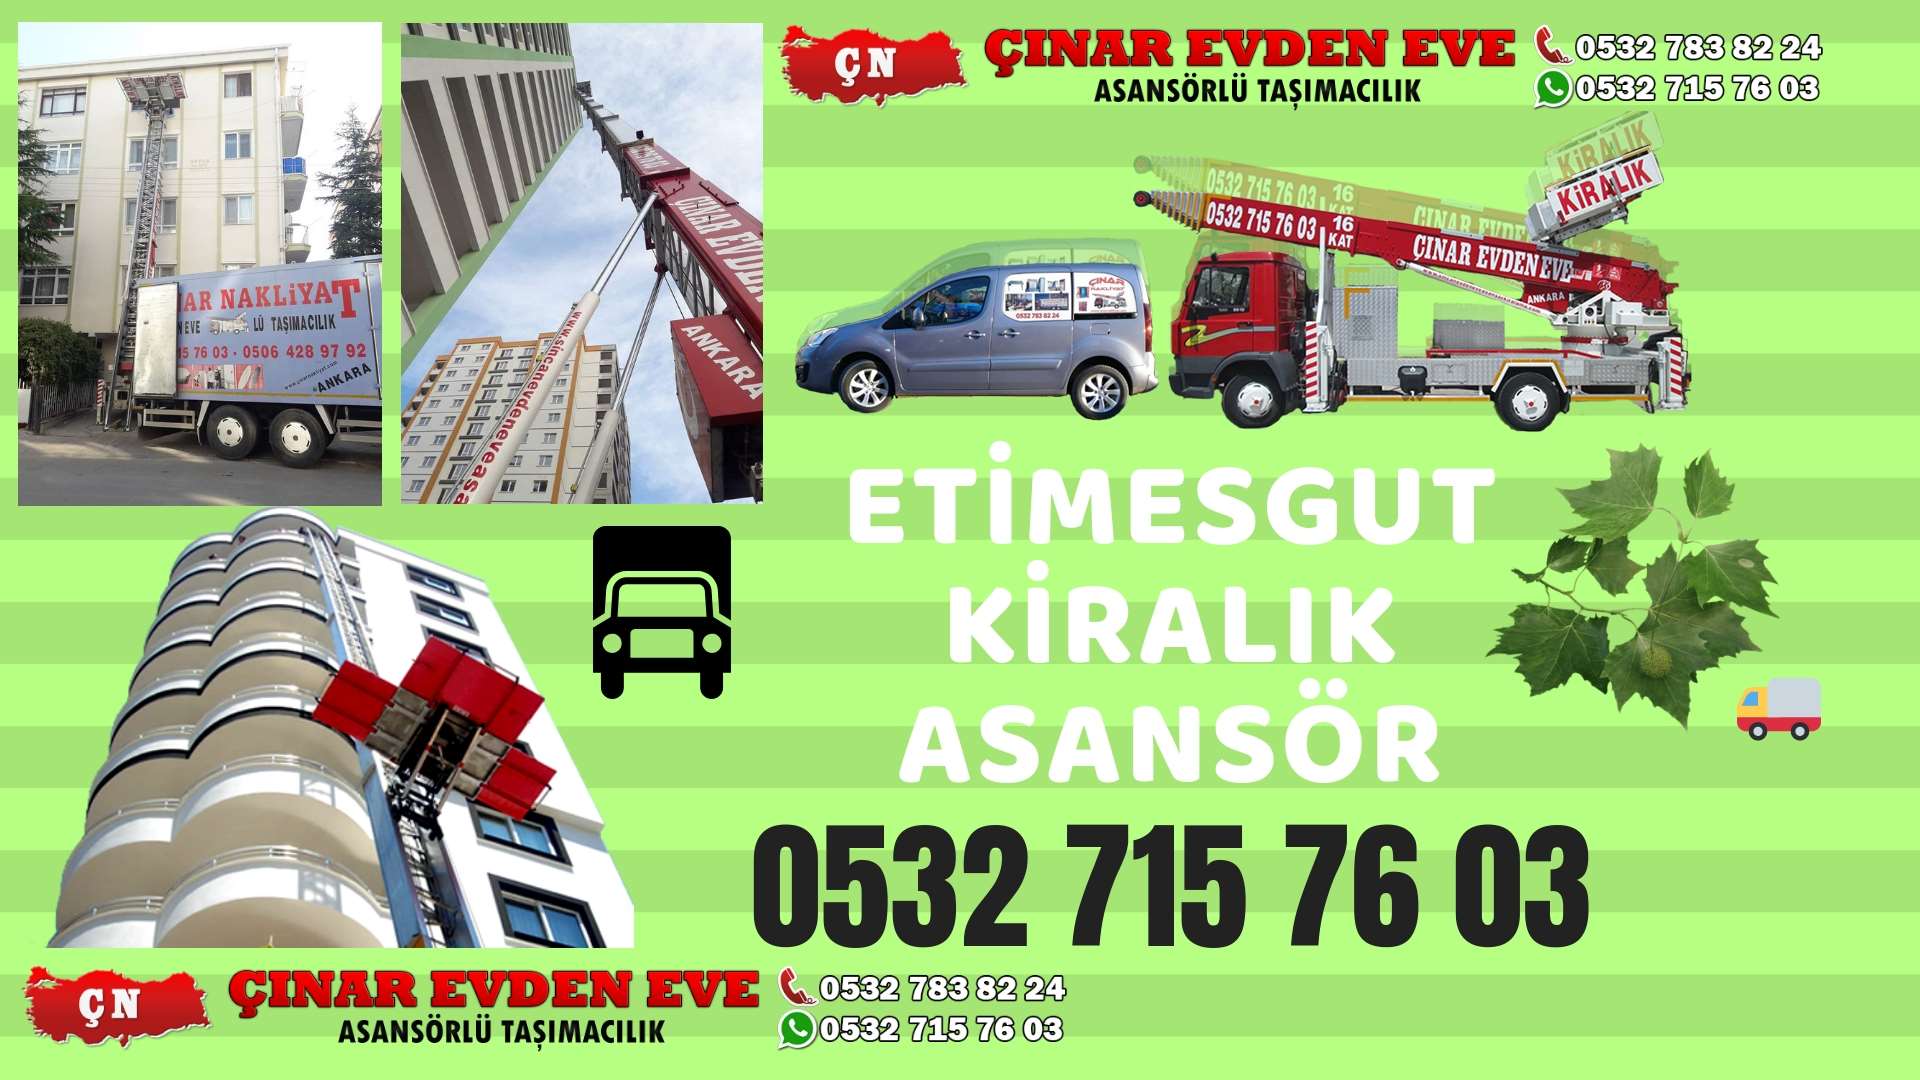 Ankara Etimesgut Ev taşıma asansörü kiralama ankara 0532 715 76 03